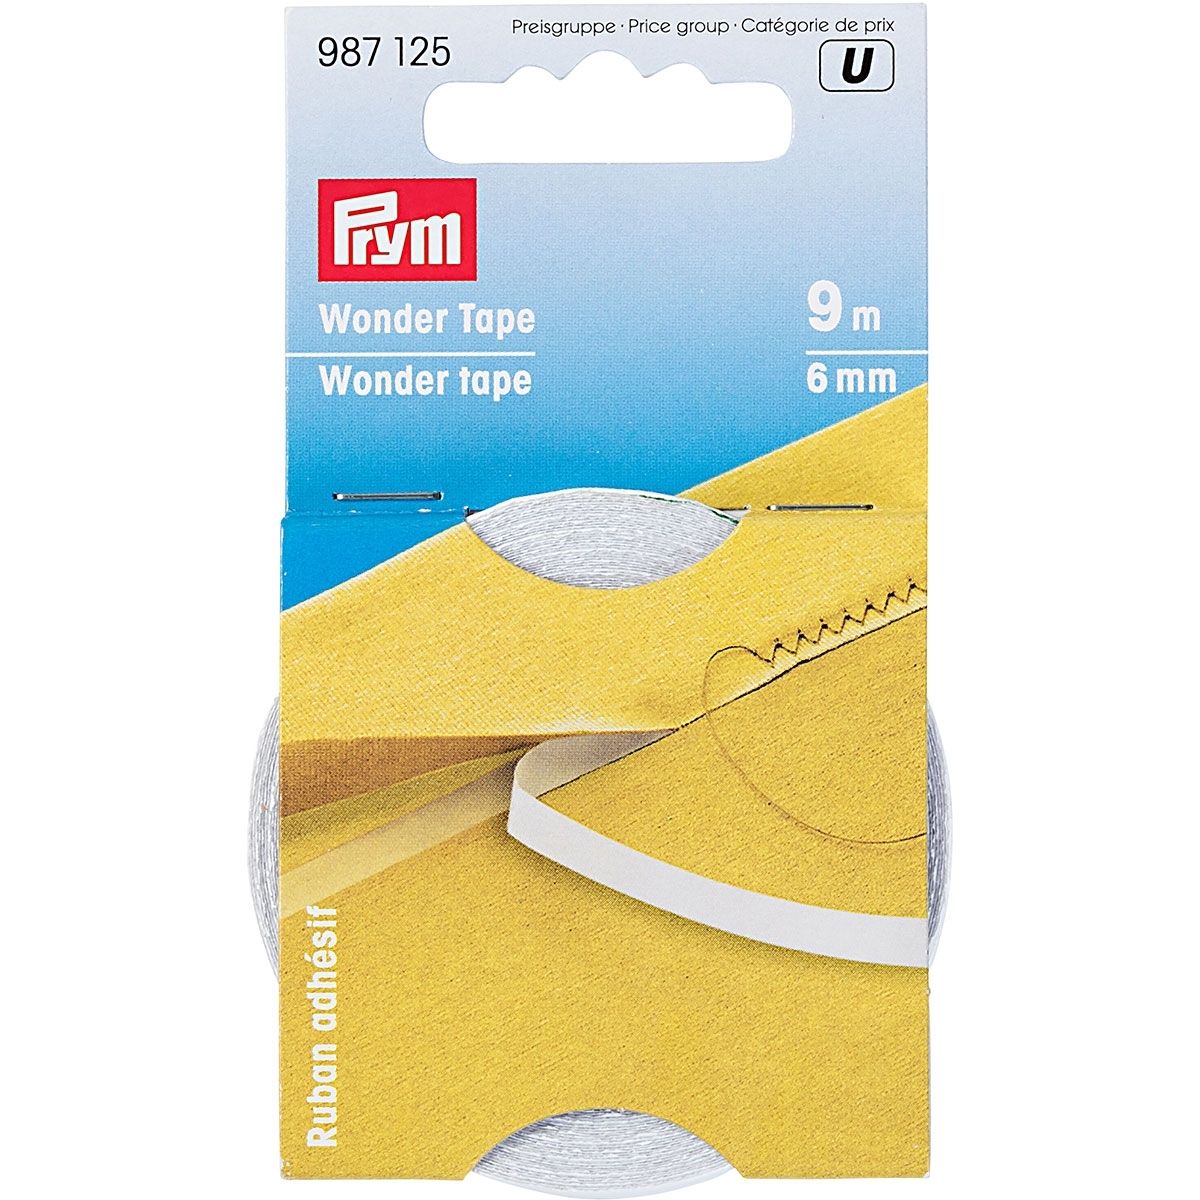 Prym Wonder Tape 9 m (6 mm) 987125. Double sided adhesive dissolving fabric tape.